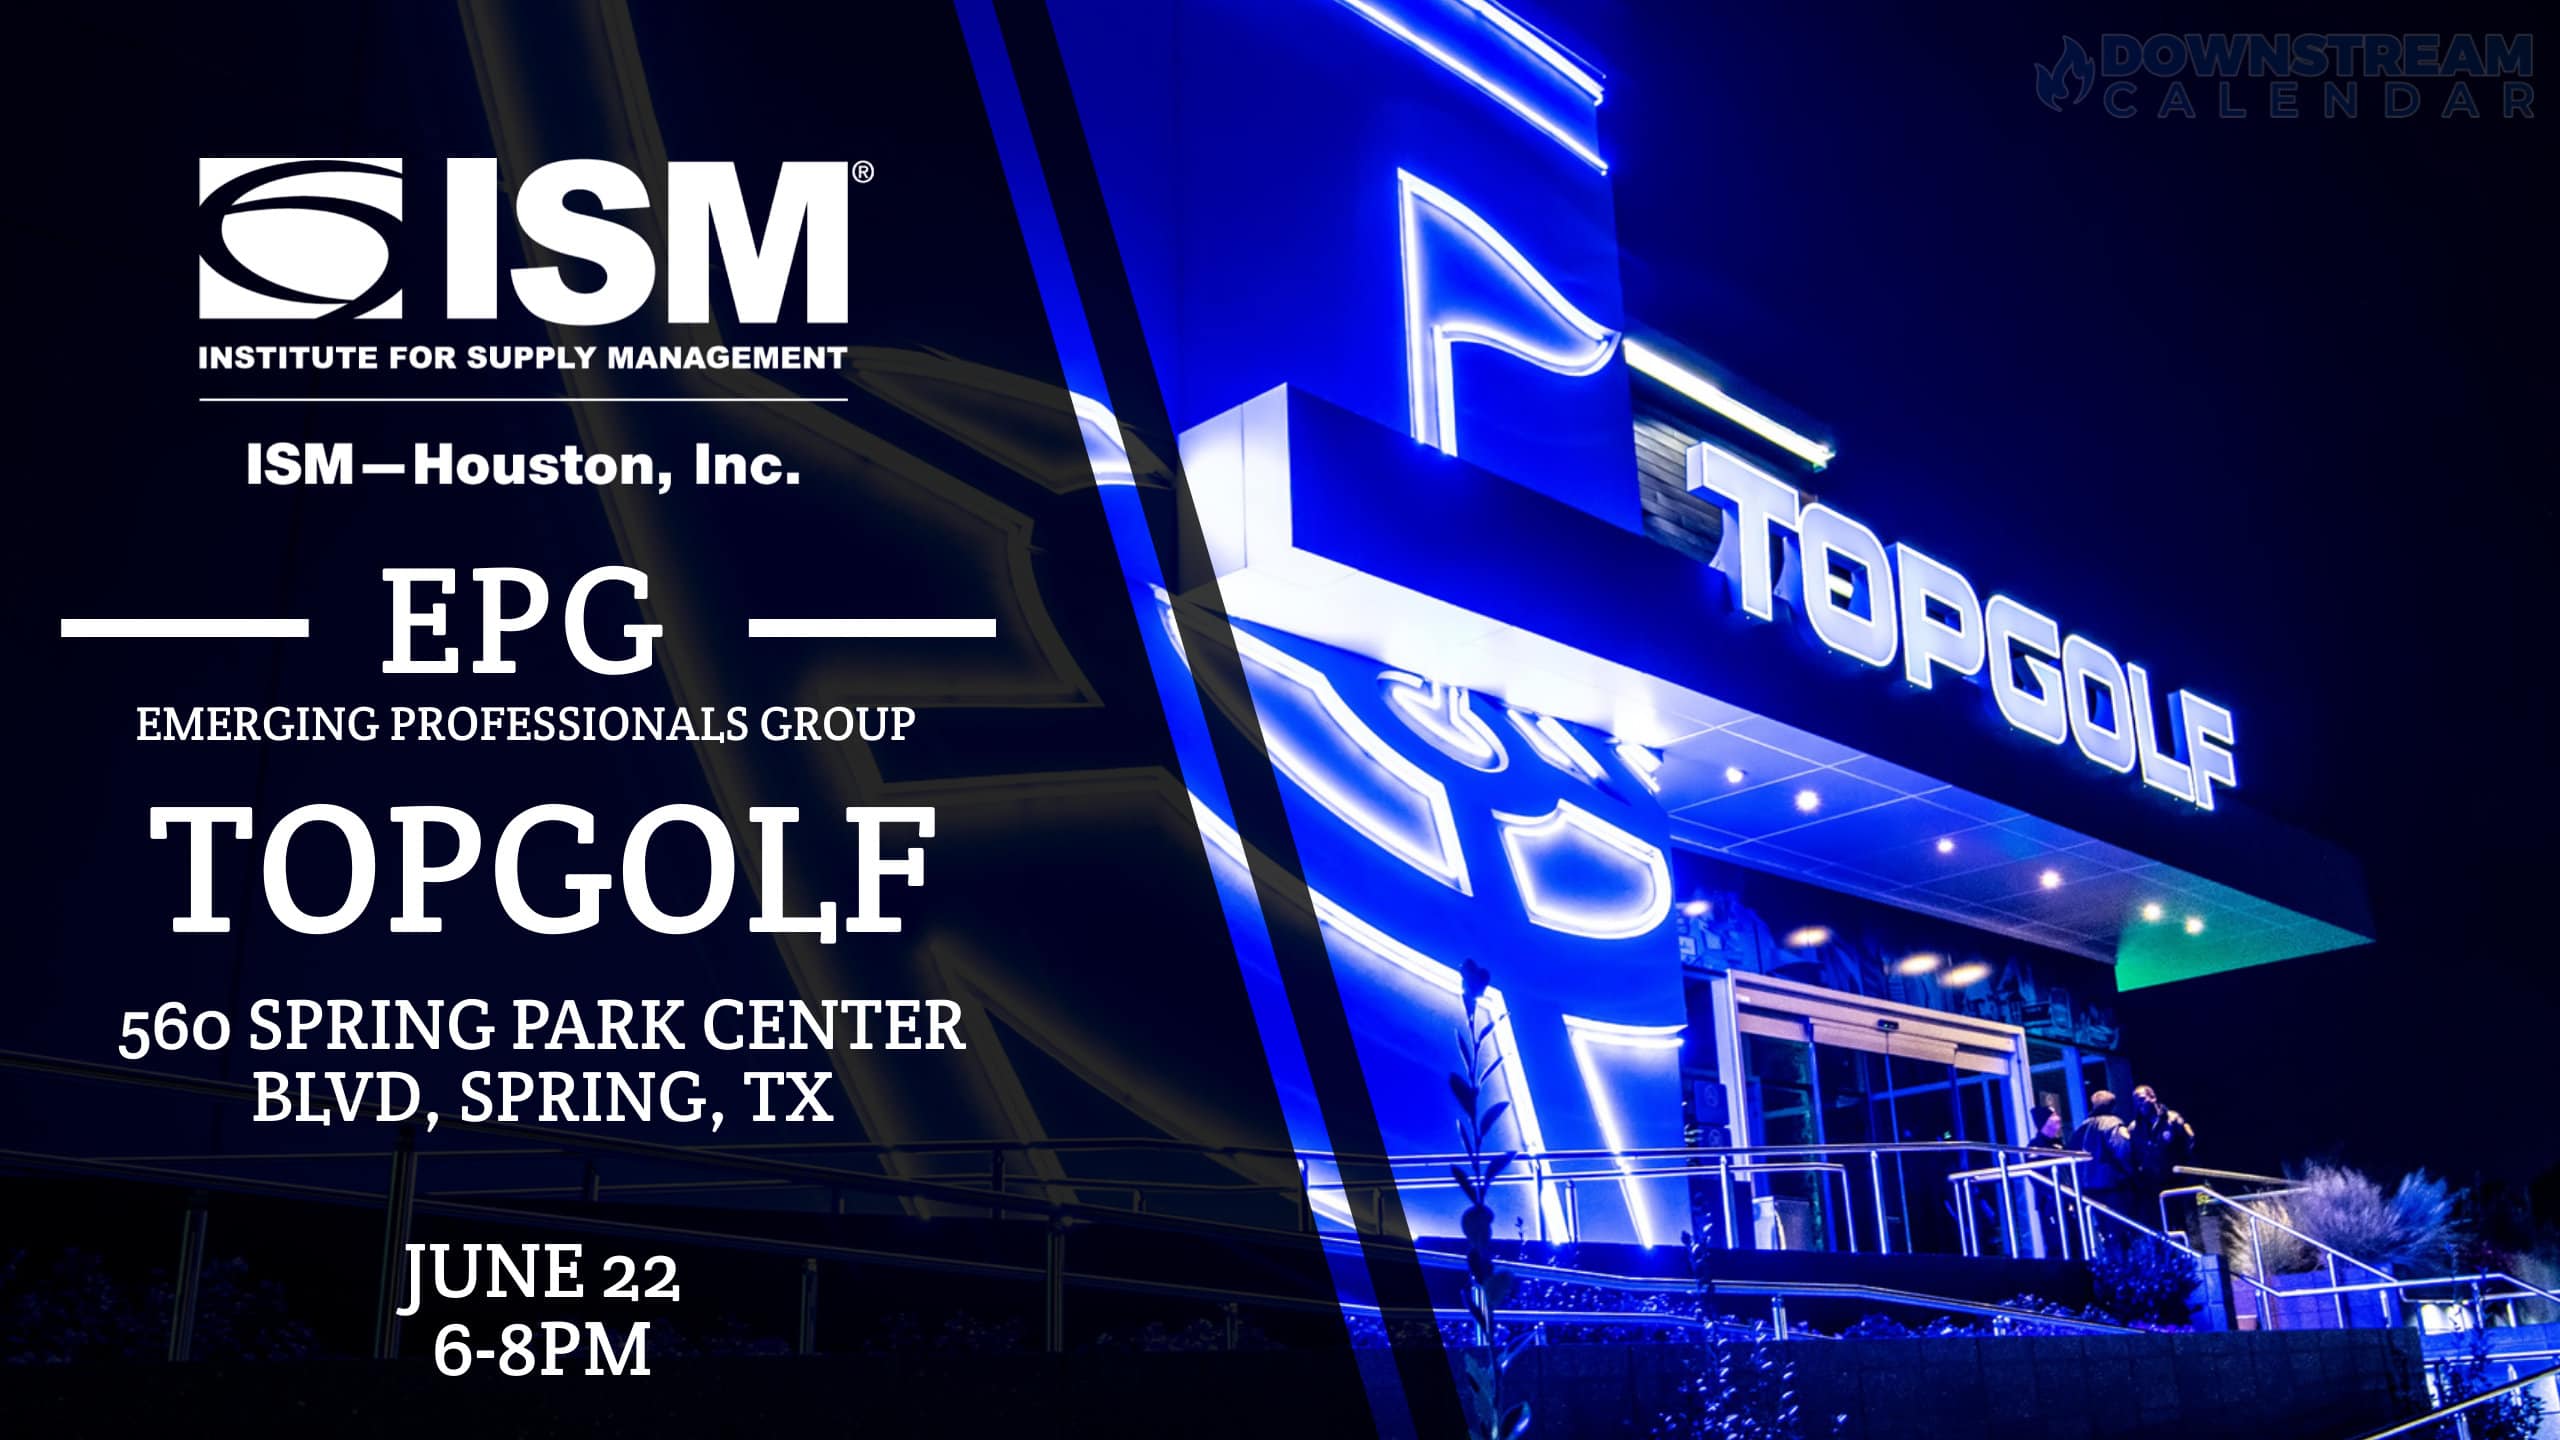 ISM Houston EPG Topgolf Mixer Emerging Professionals Event June 22